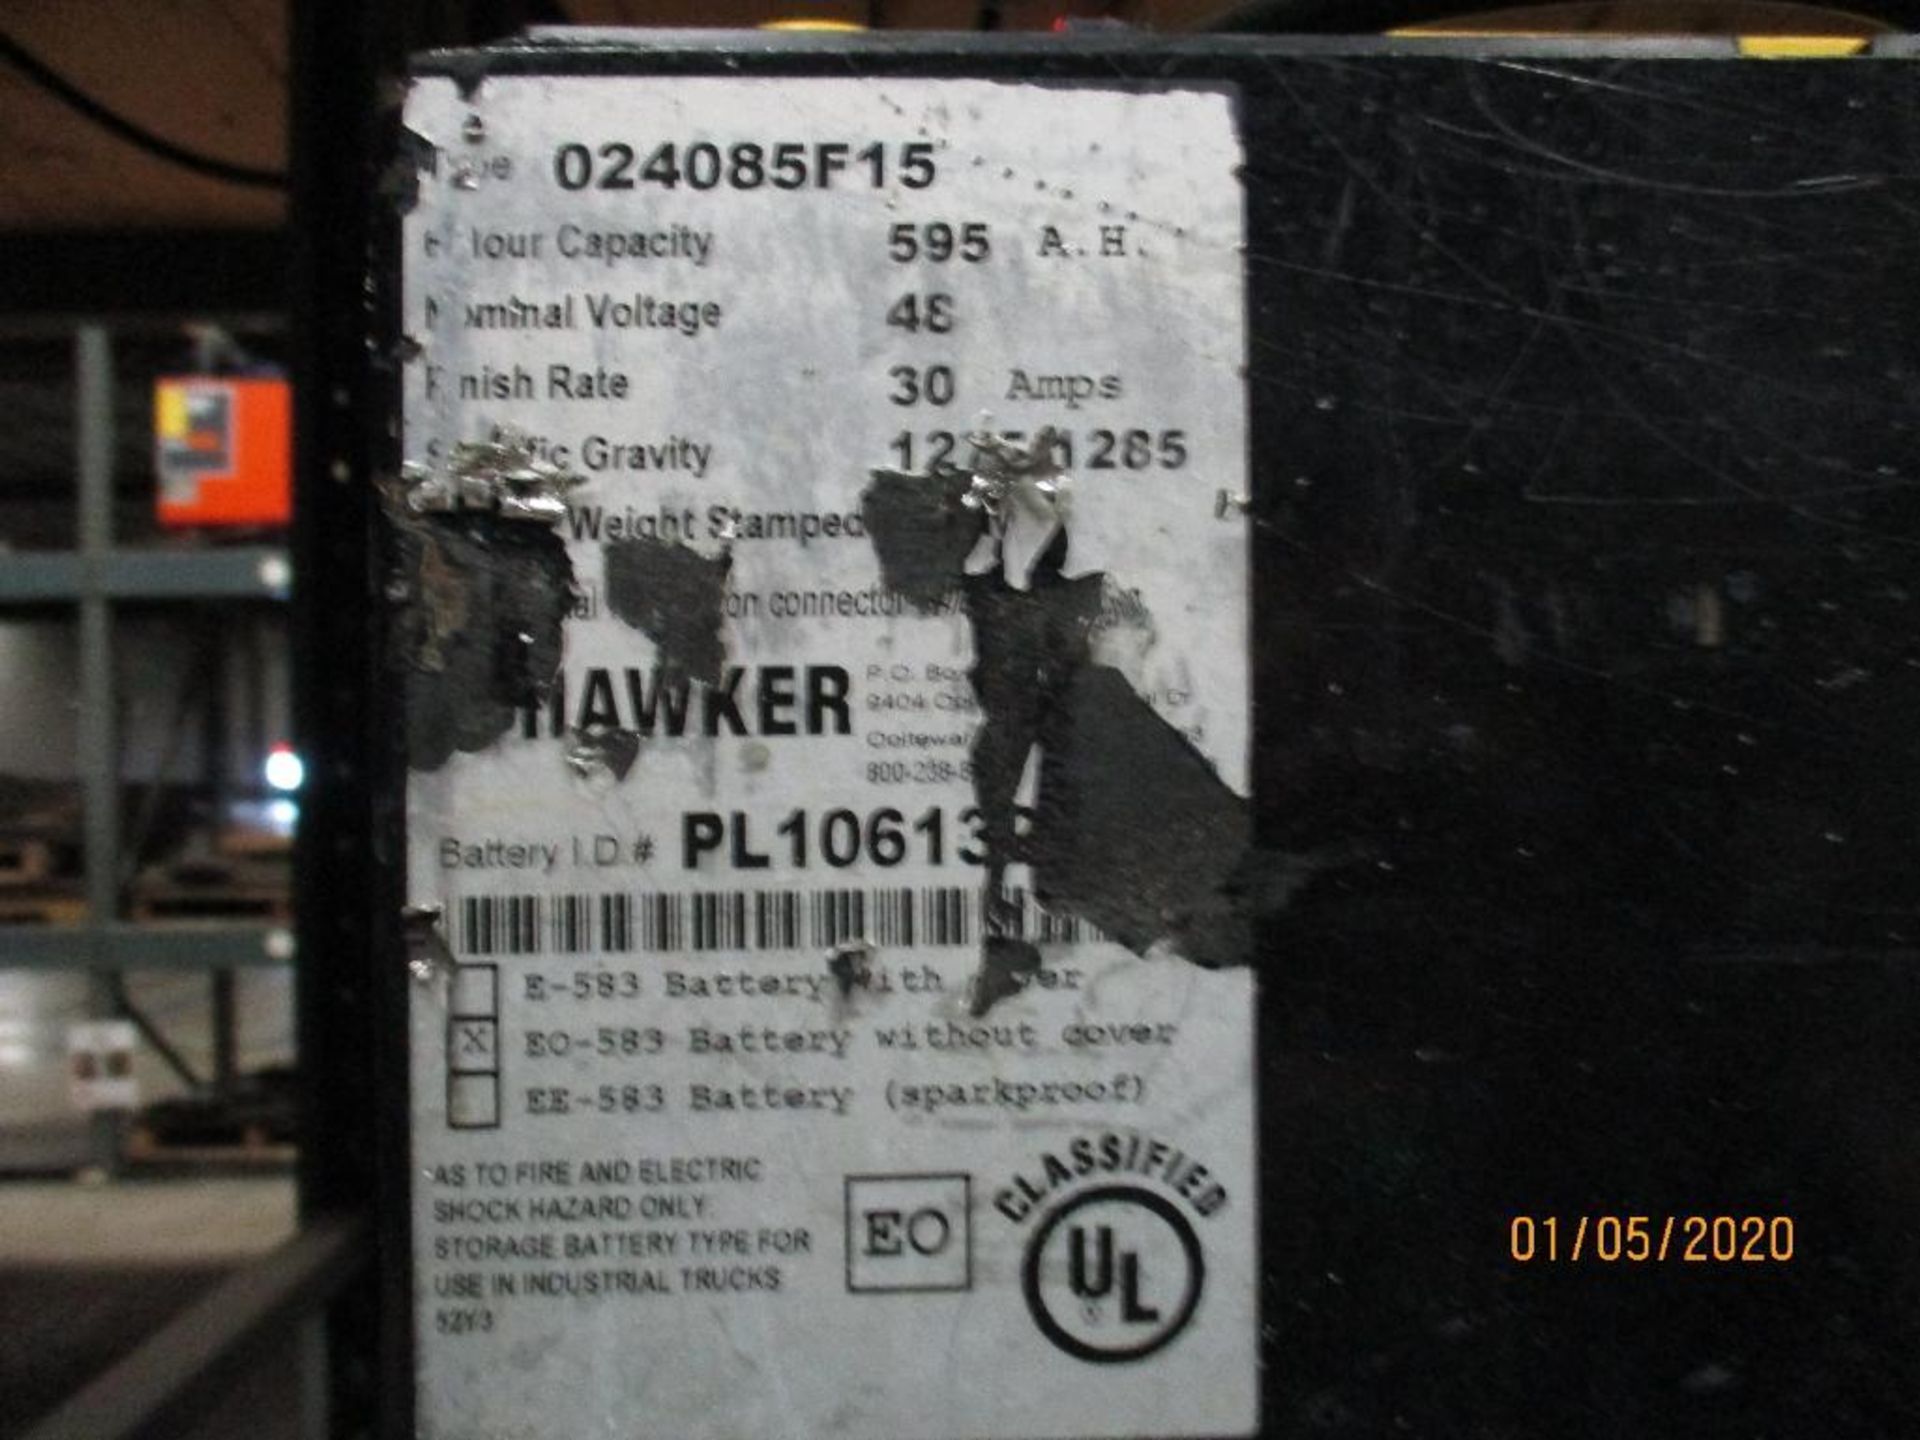 Hawker Forklift Battery (24) 595 Amp Hours, 48v, Type No. 024085F15 - Image 2 of 2